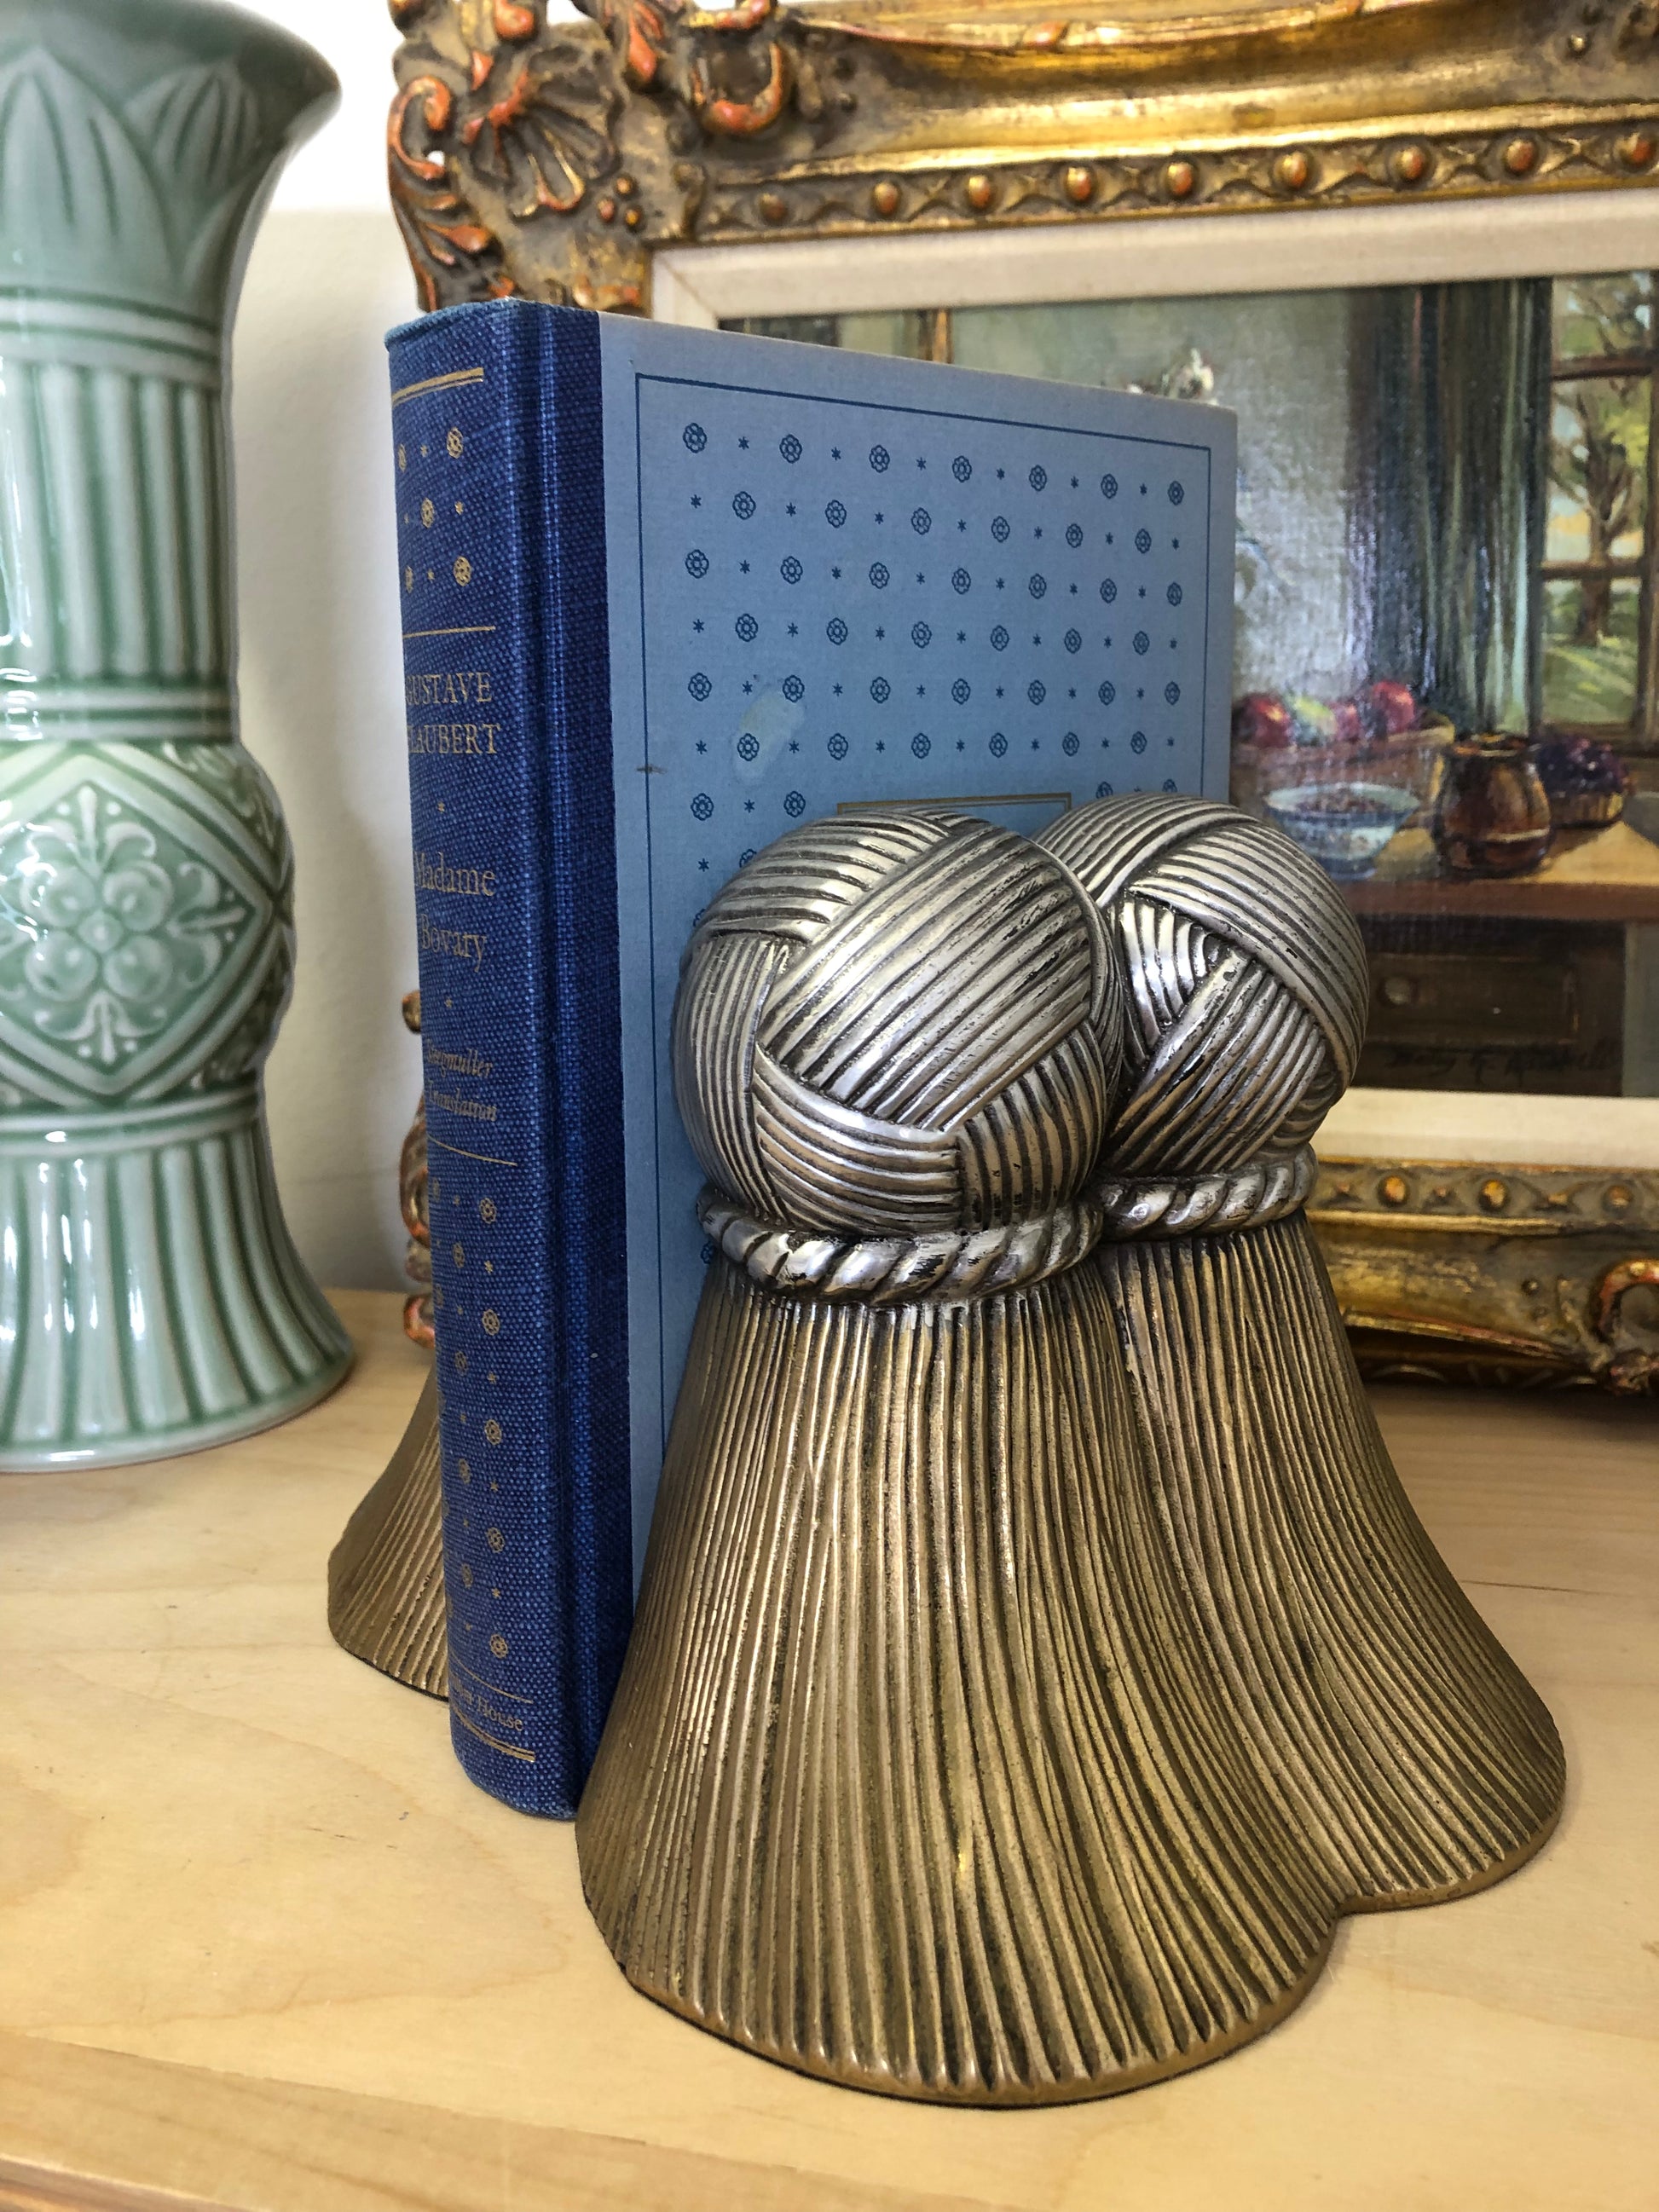 Fabulous Pair of Brass Shell Bookends – Lillian Grey